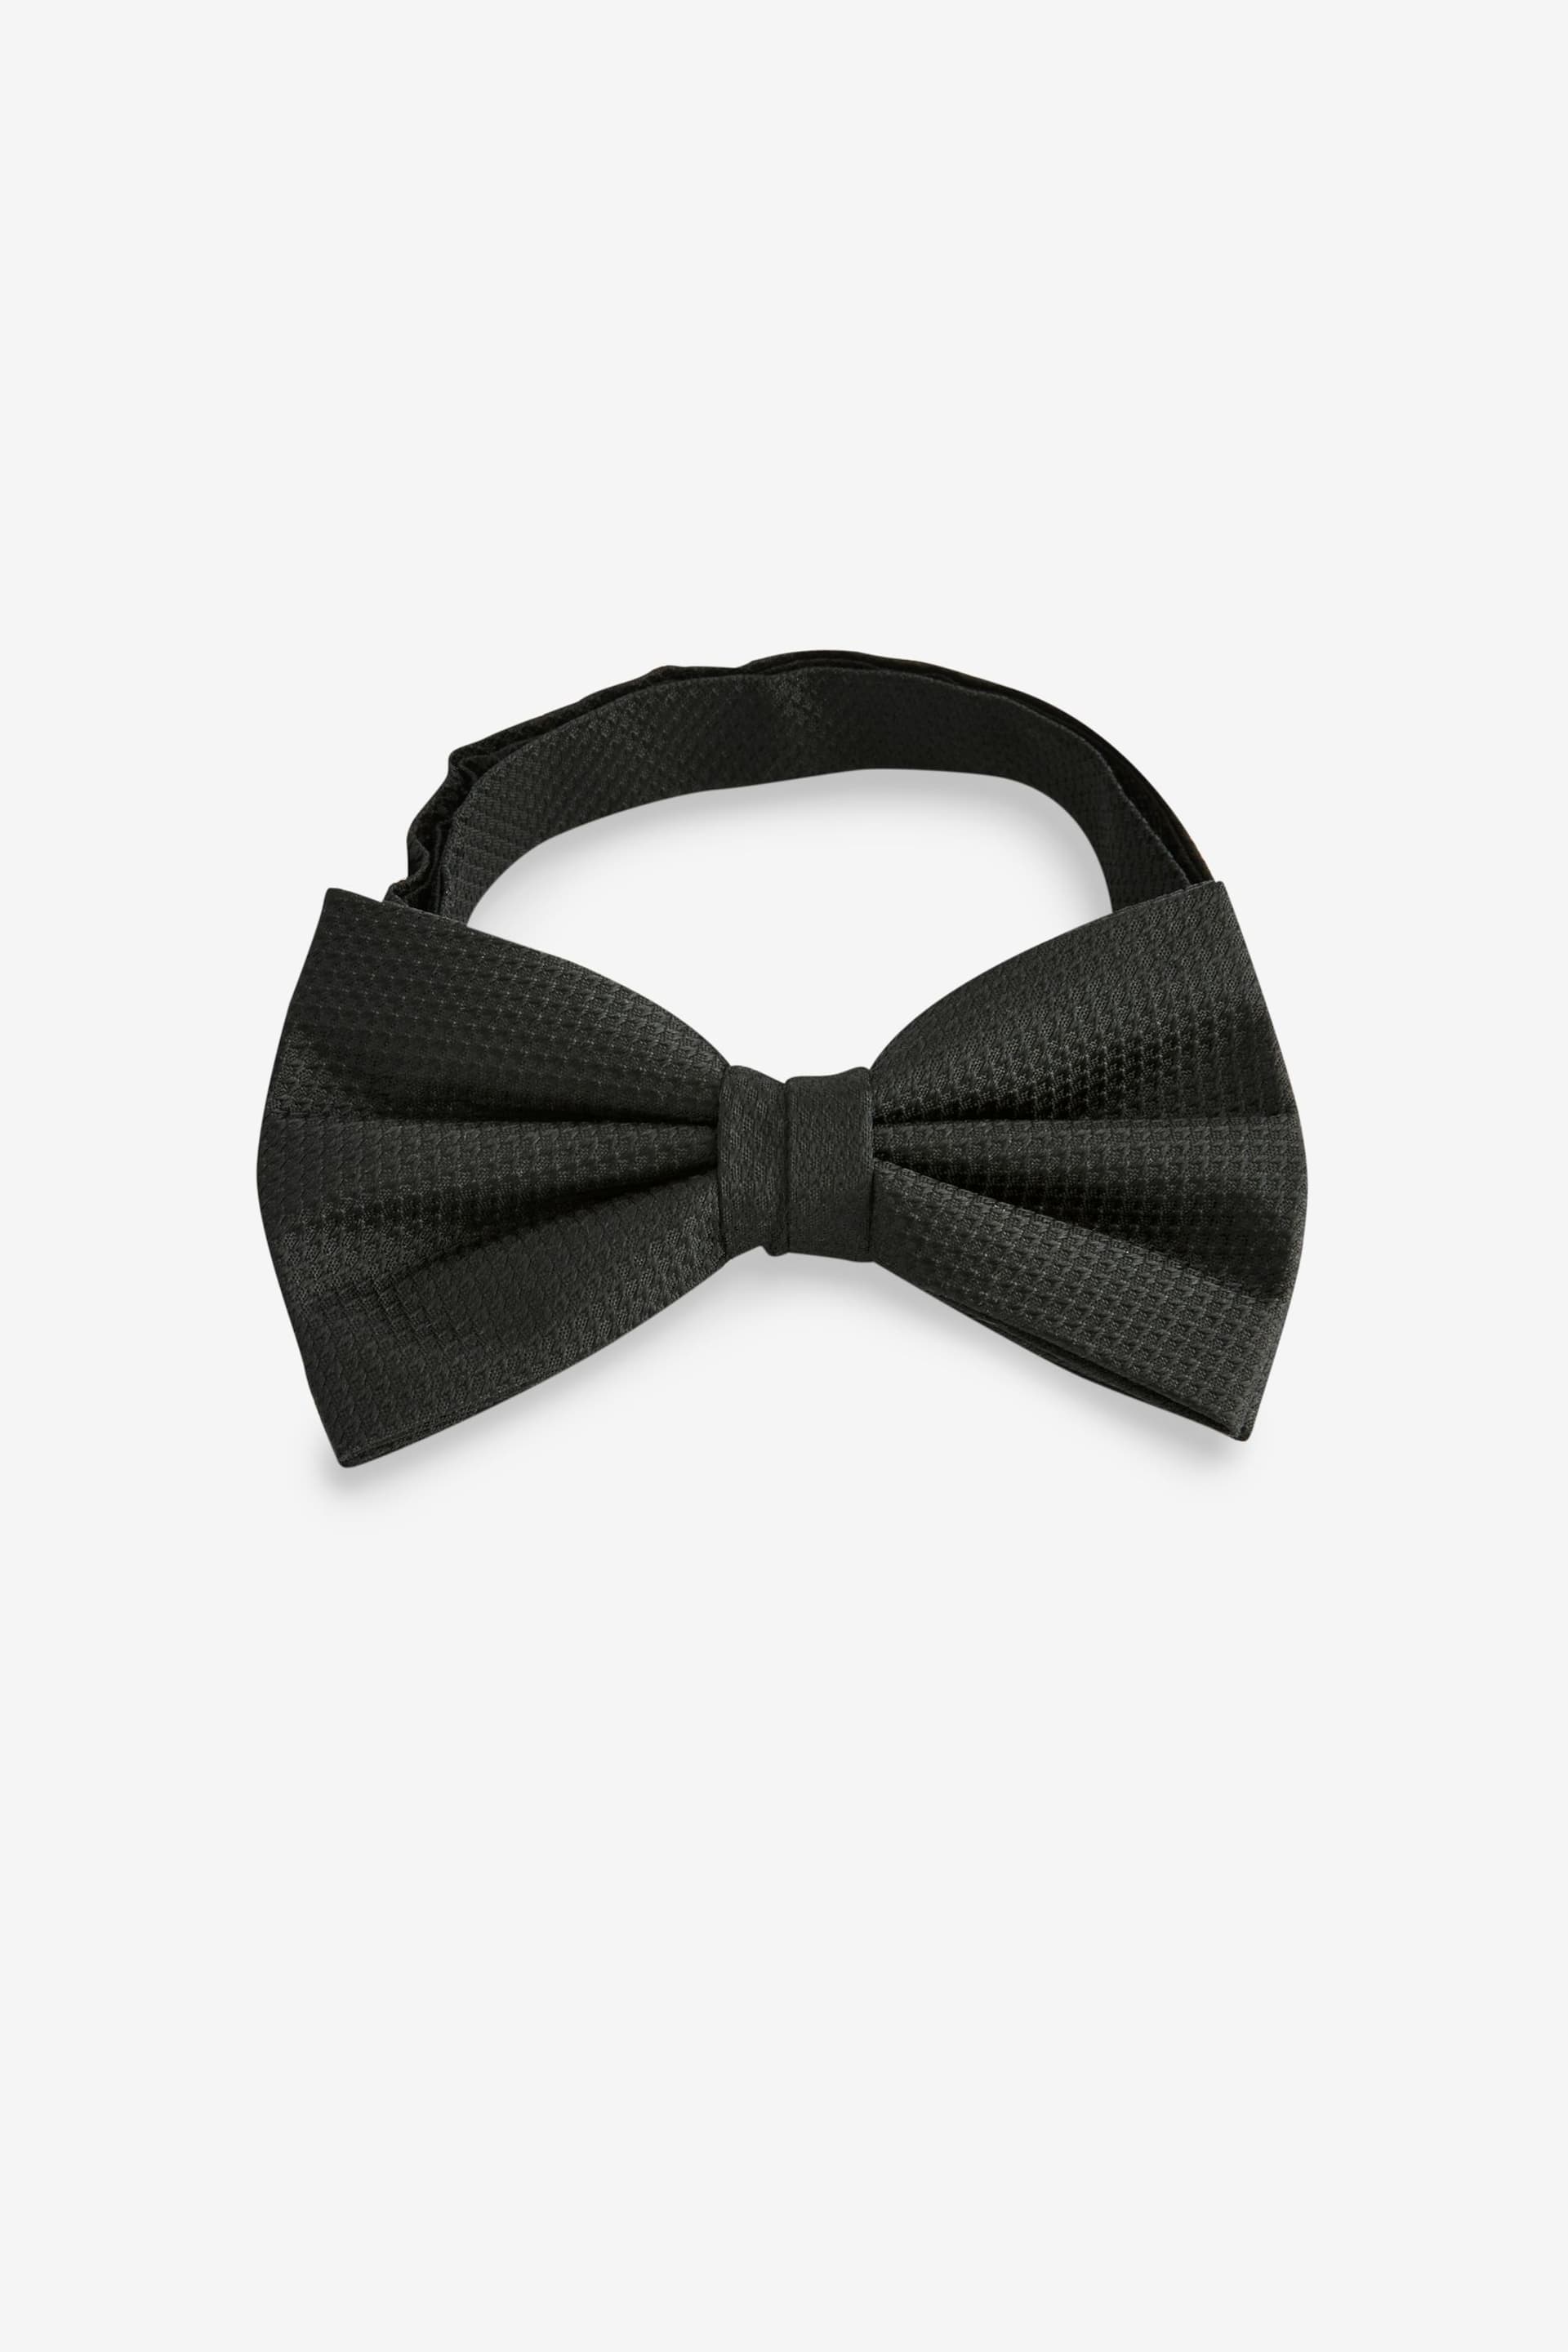 Black Textured Silk Bow Tie - Image 3 of 4